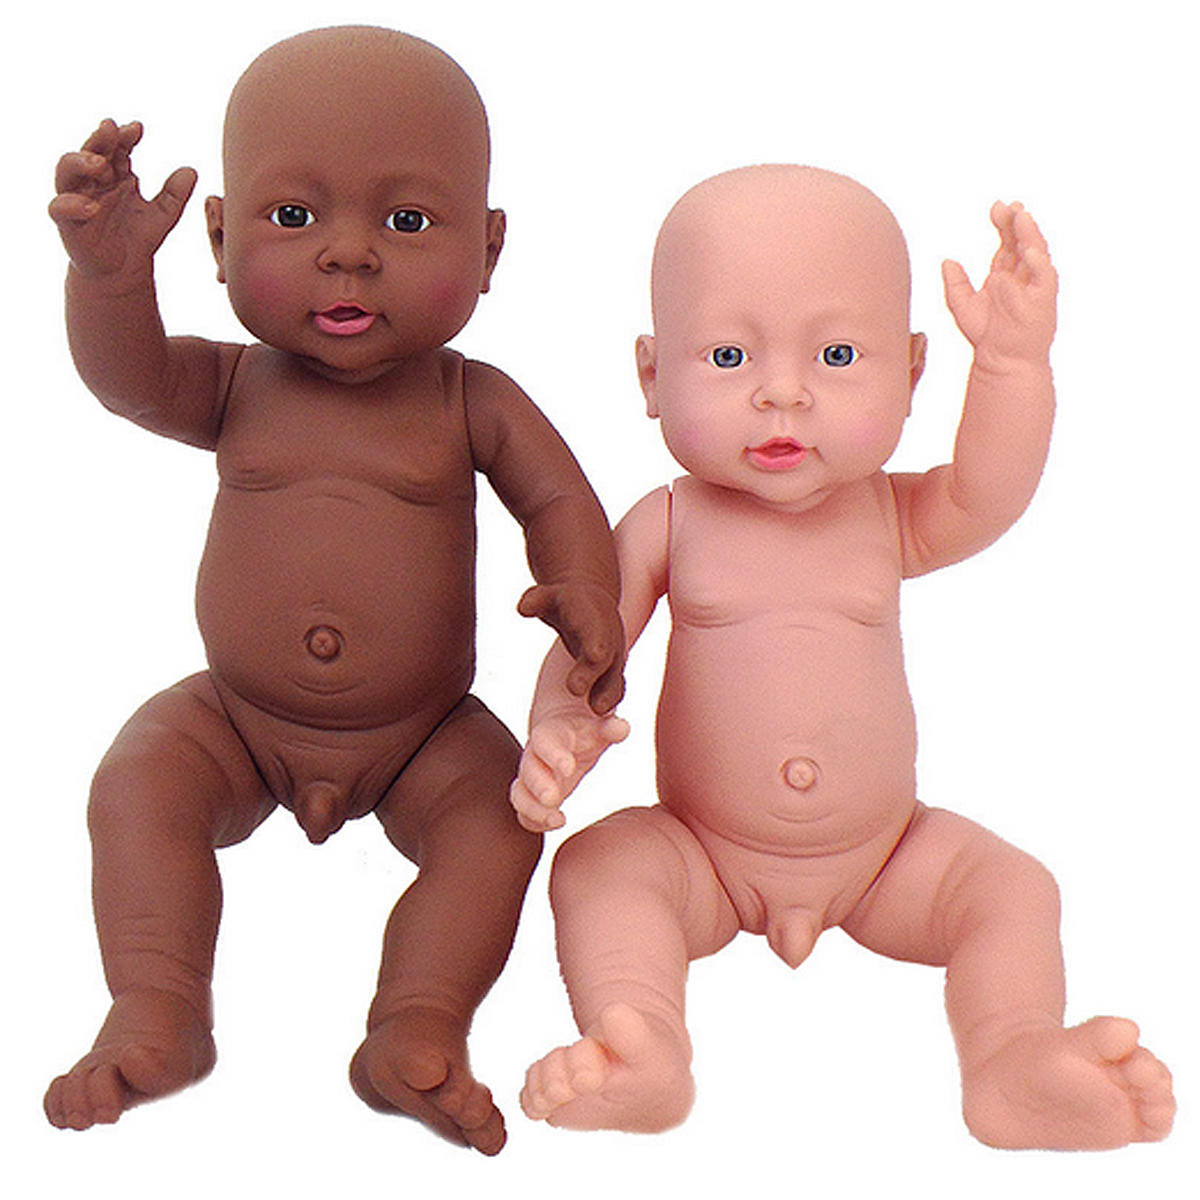 Unpainted-Blank-Doll-Mold-Full-Silicone-Vinyl-Reborn-Doll-Lifelike-Take-Care-Training-Figure-Baby-Do-1460193-2